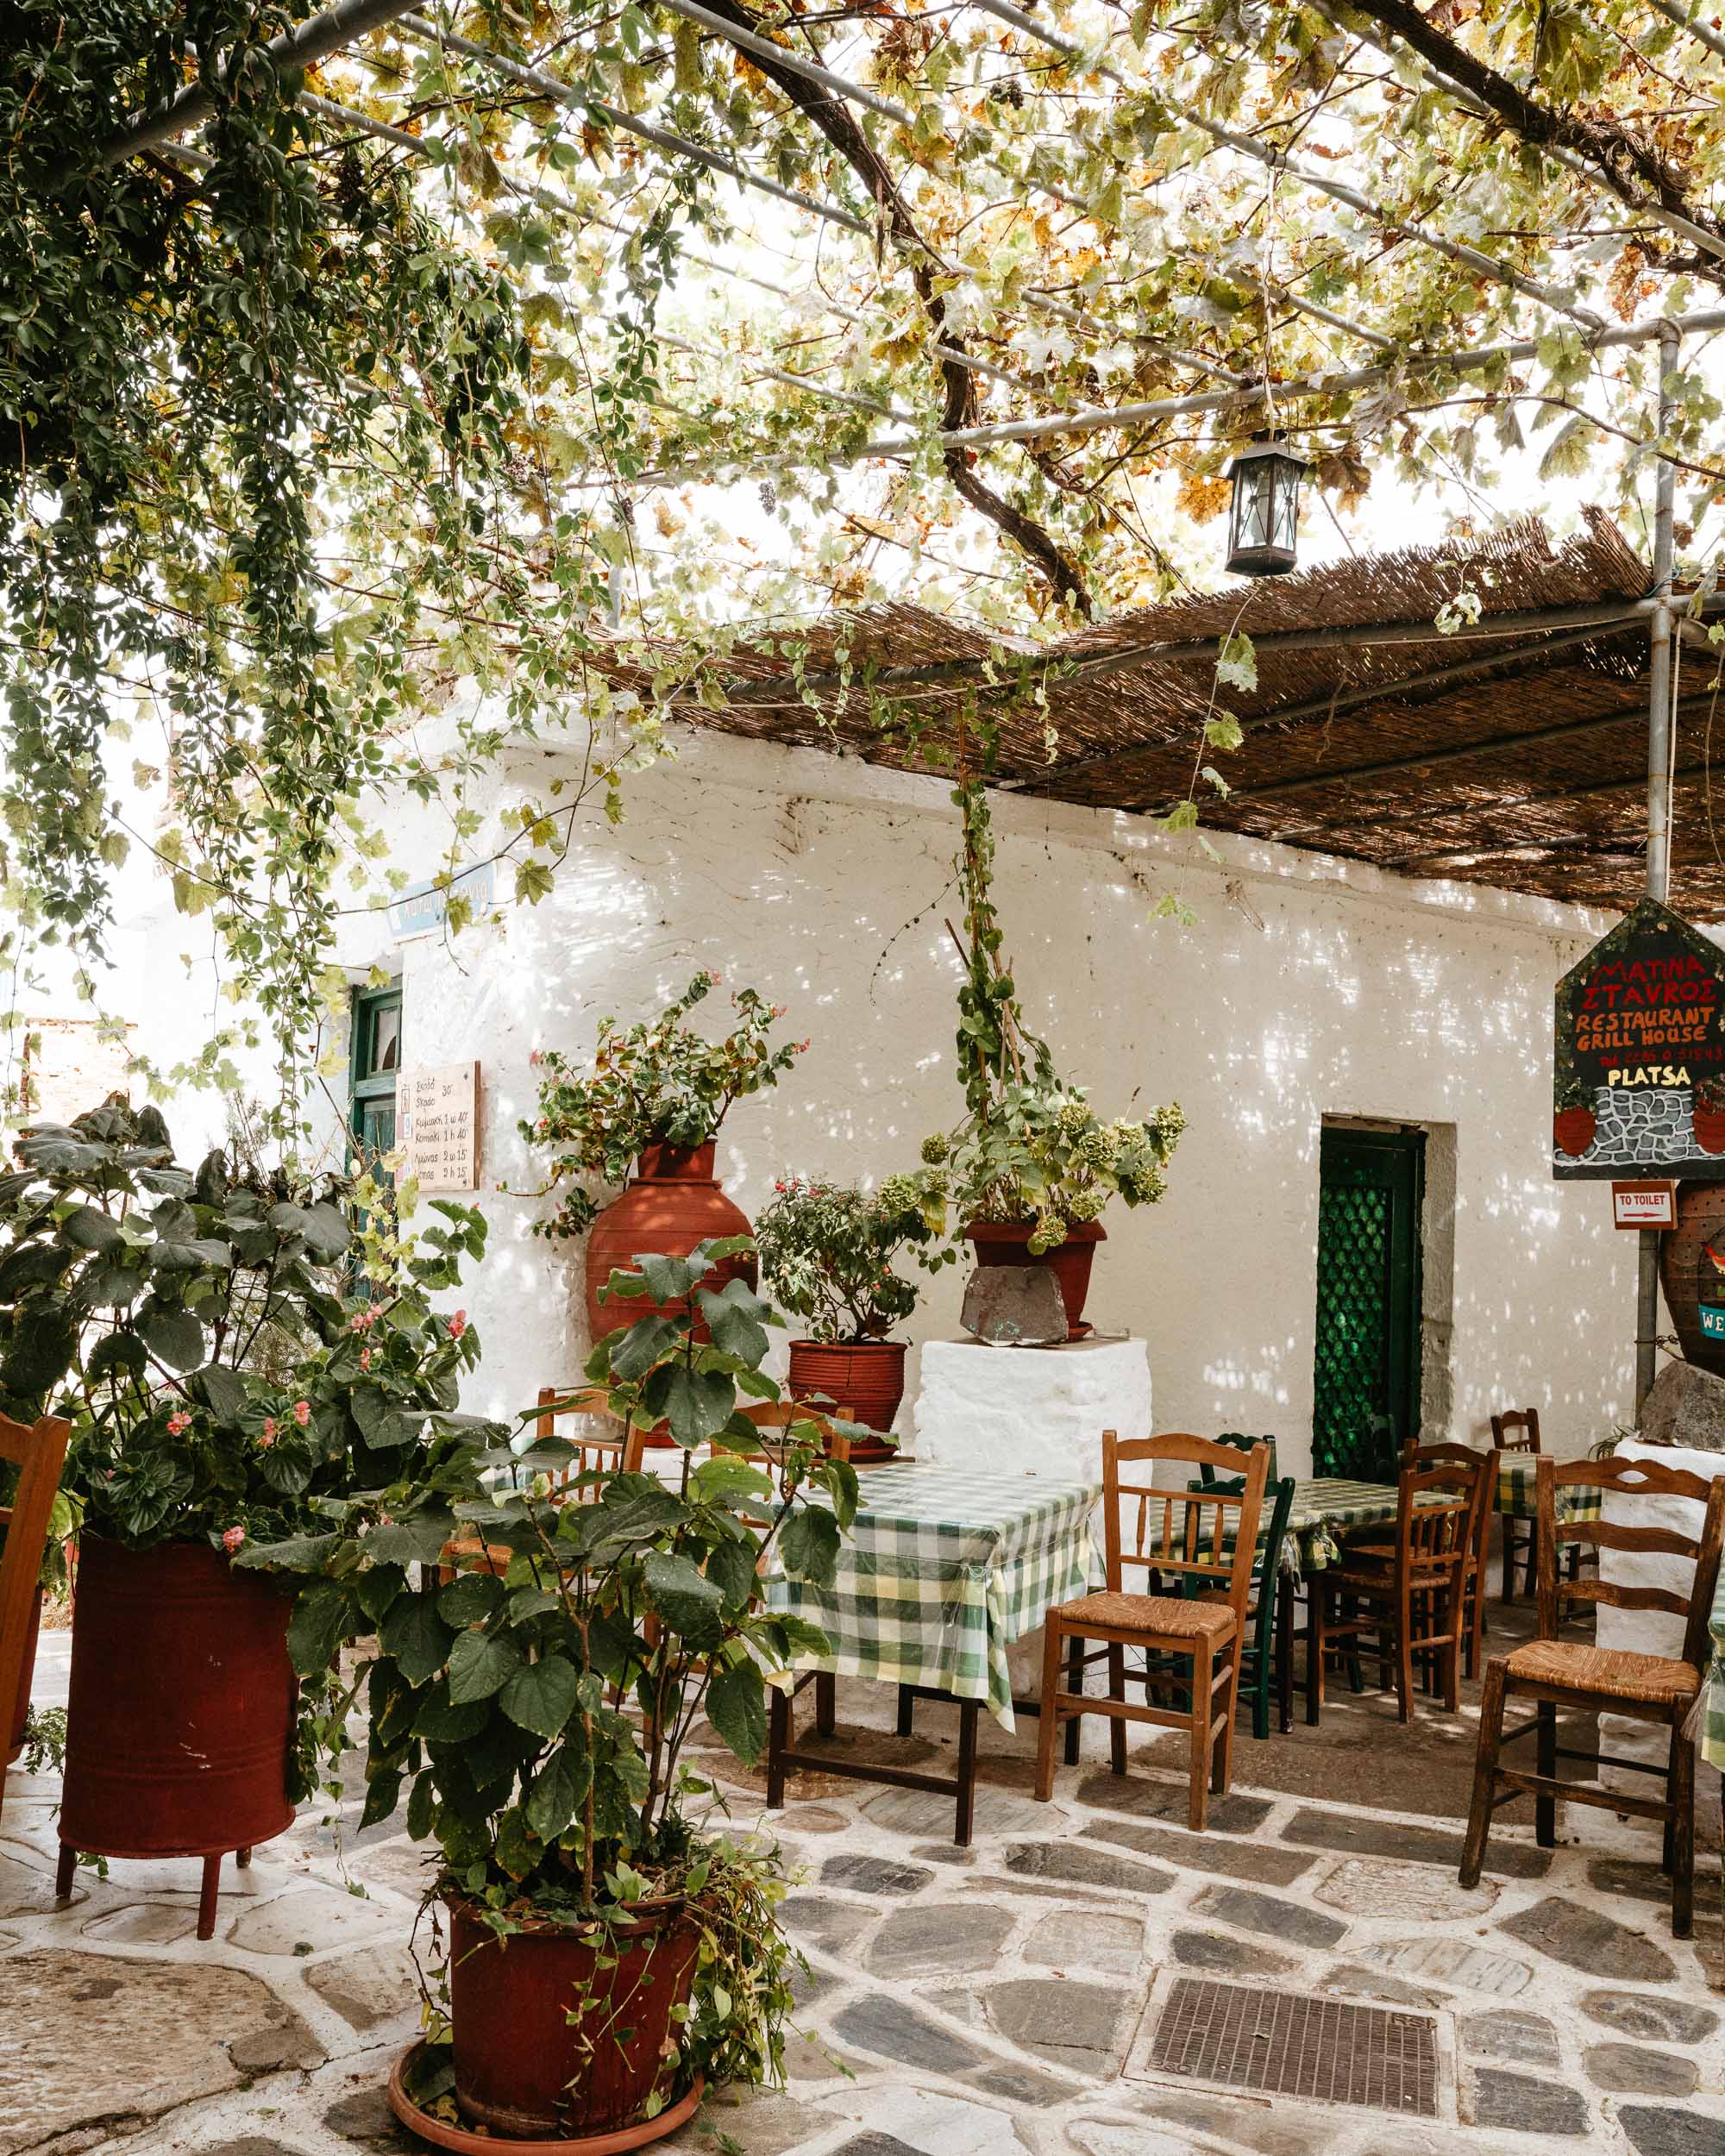 Koronos mountain village in Naxos, Greek Islands via @finduslost